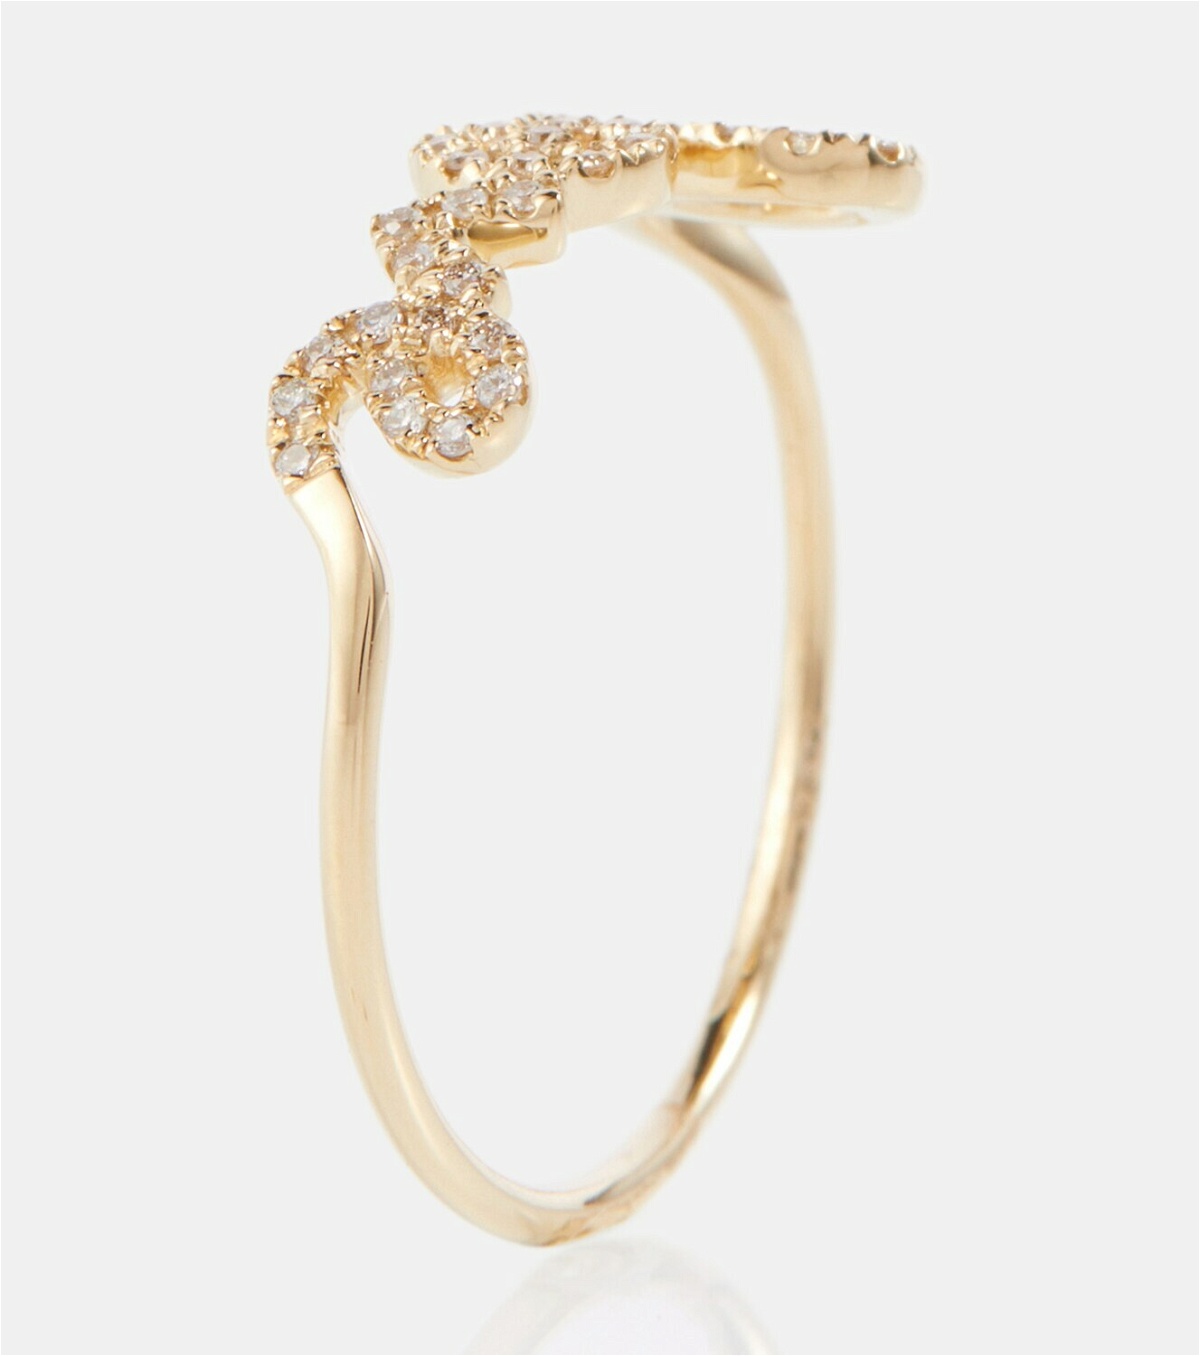 Sydney Evan Love 14kt gold ring with diamonds